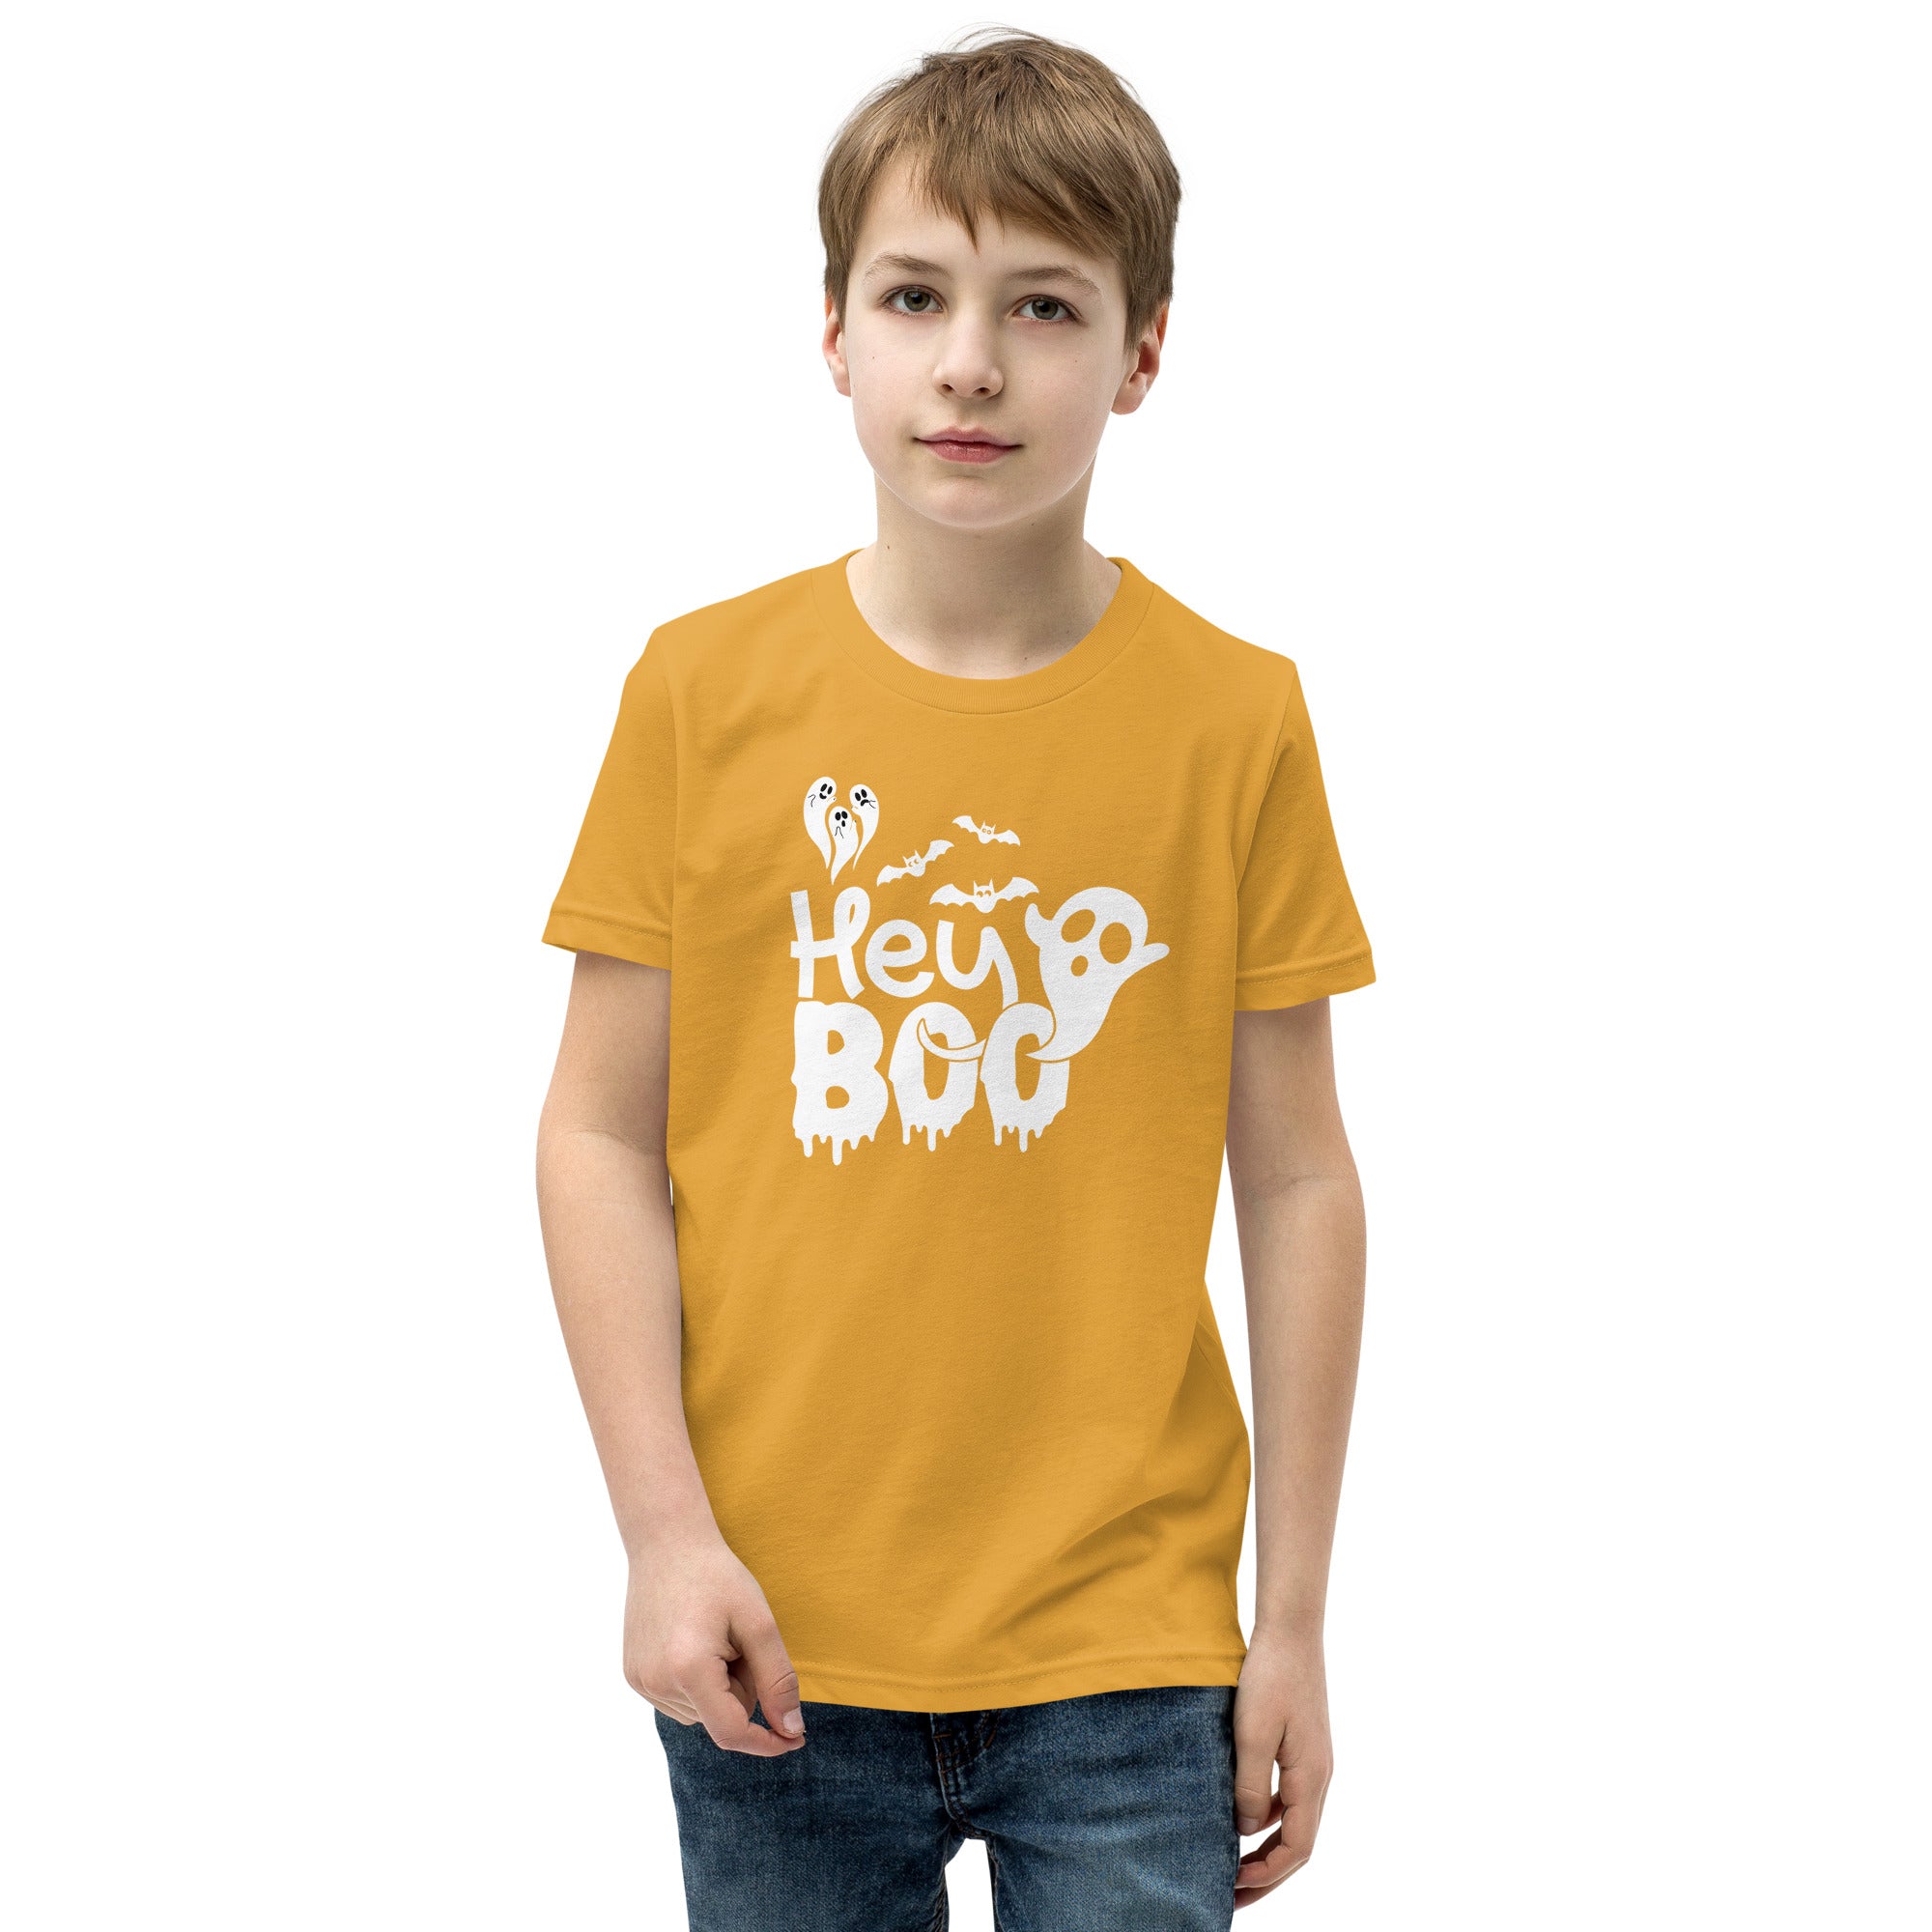 Hey Boo - Youth Short Sleeve T-Shirt